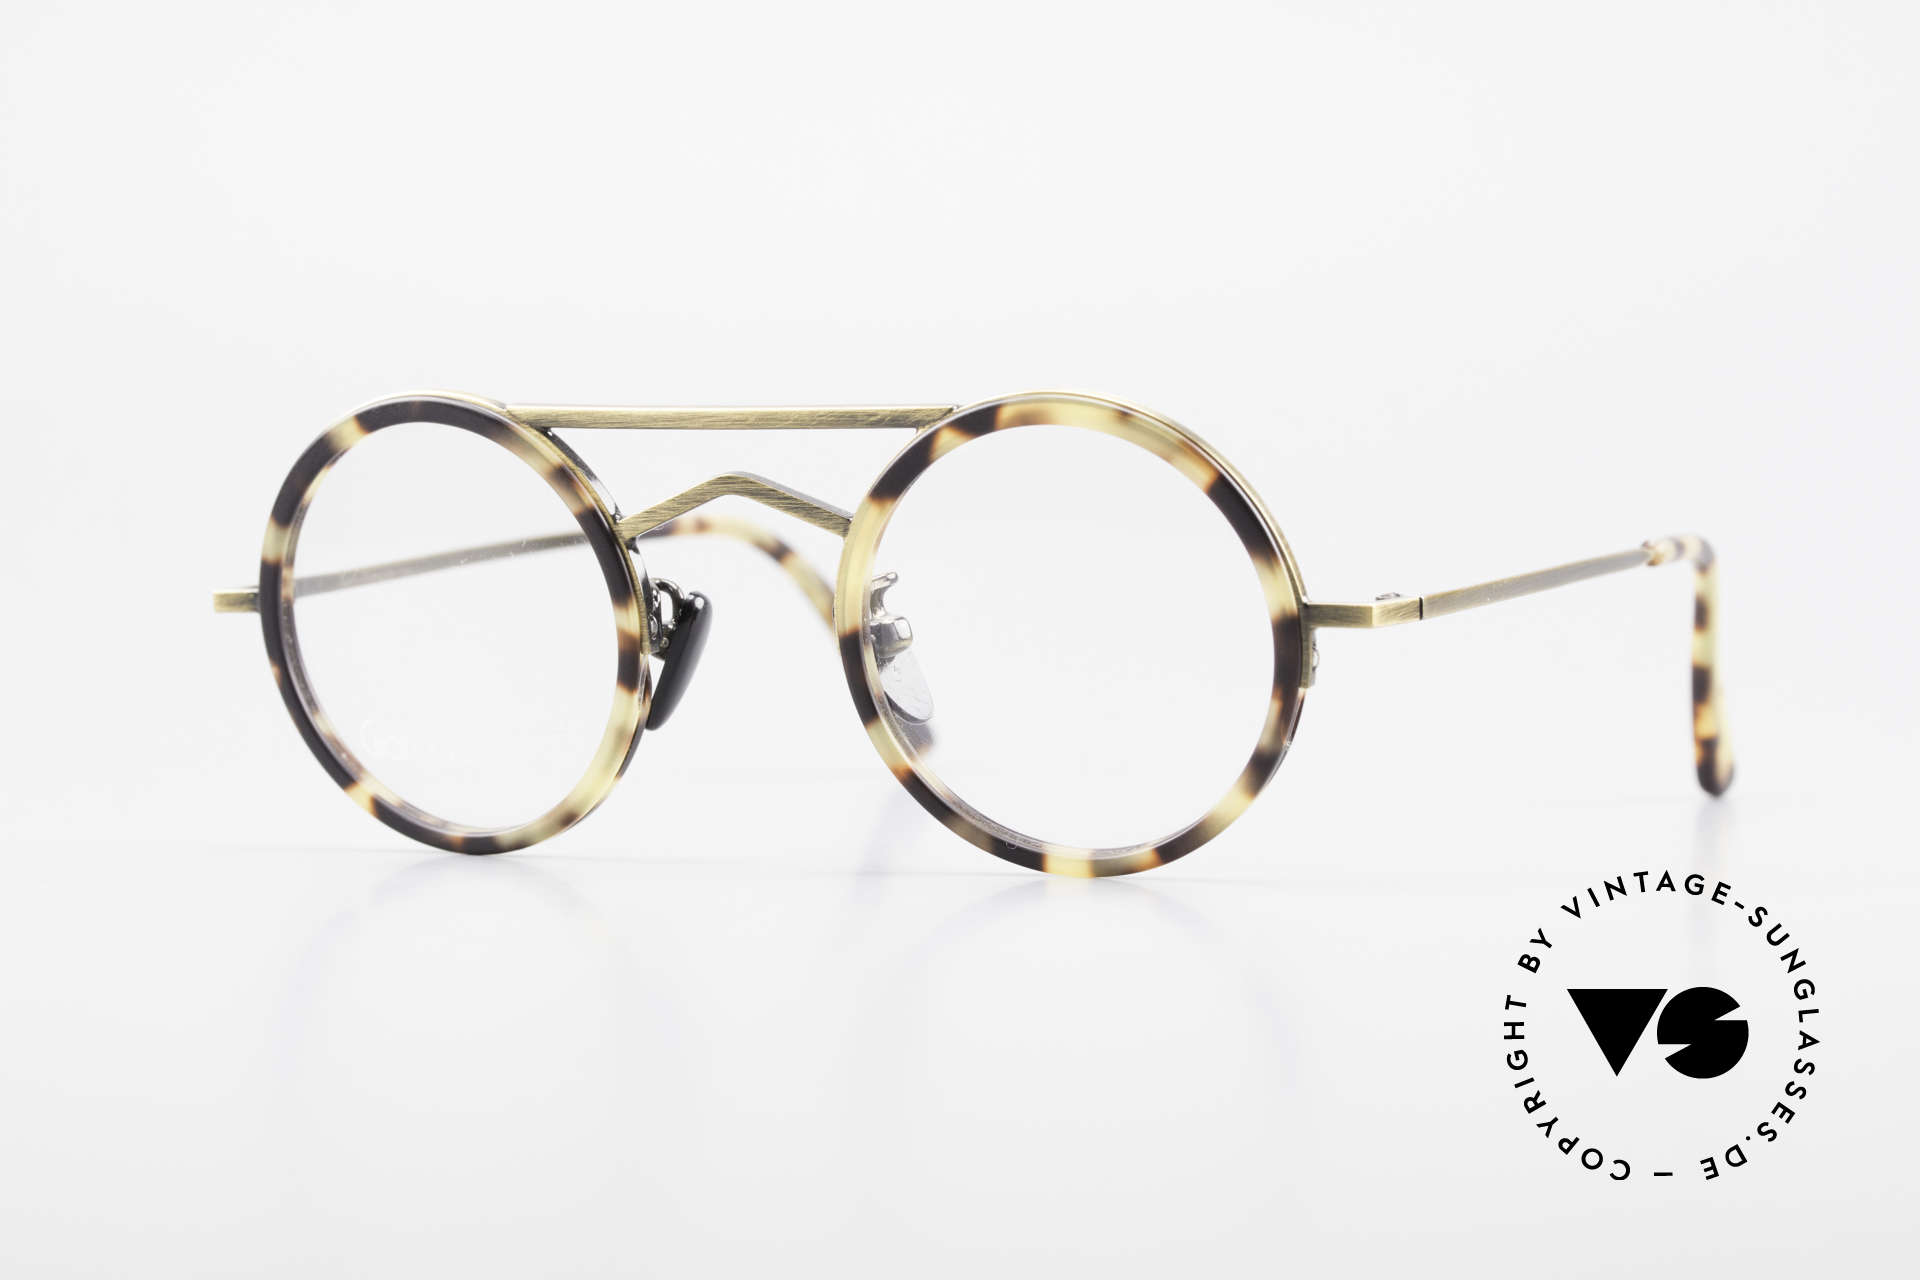 Gianni Versace 620 Round 90's Vintage Eyeglasses, small and round vintage Gianni VERSACE glasses, Made for Men and Women